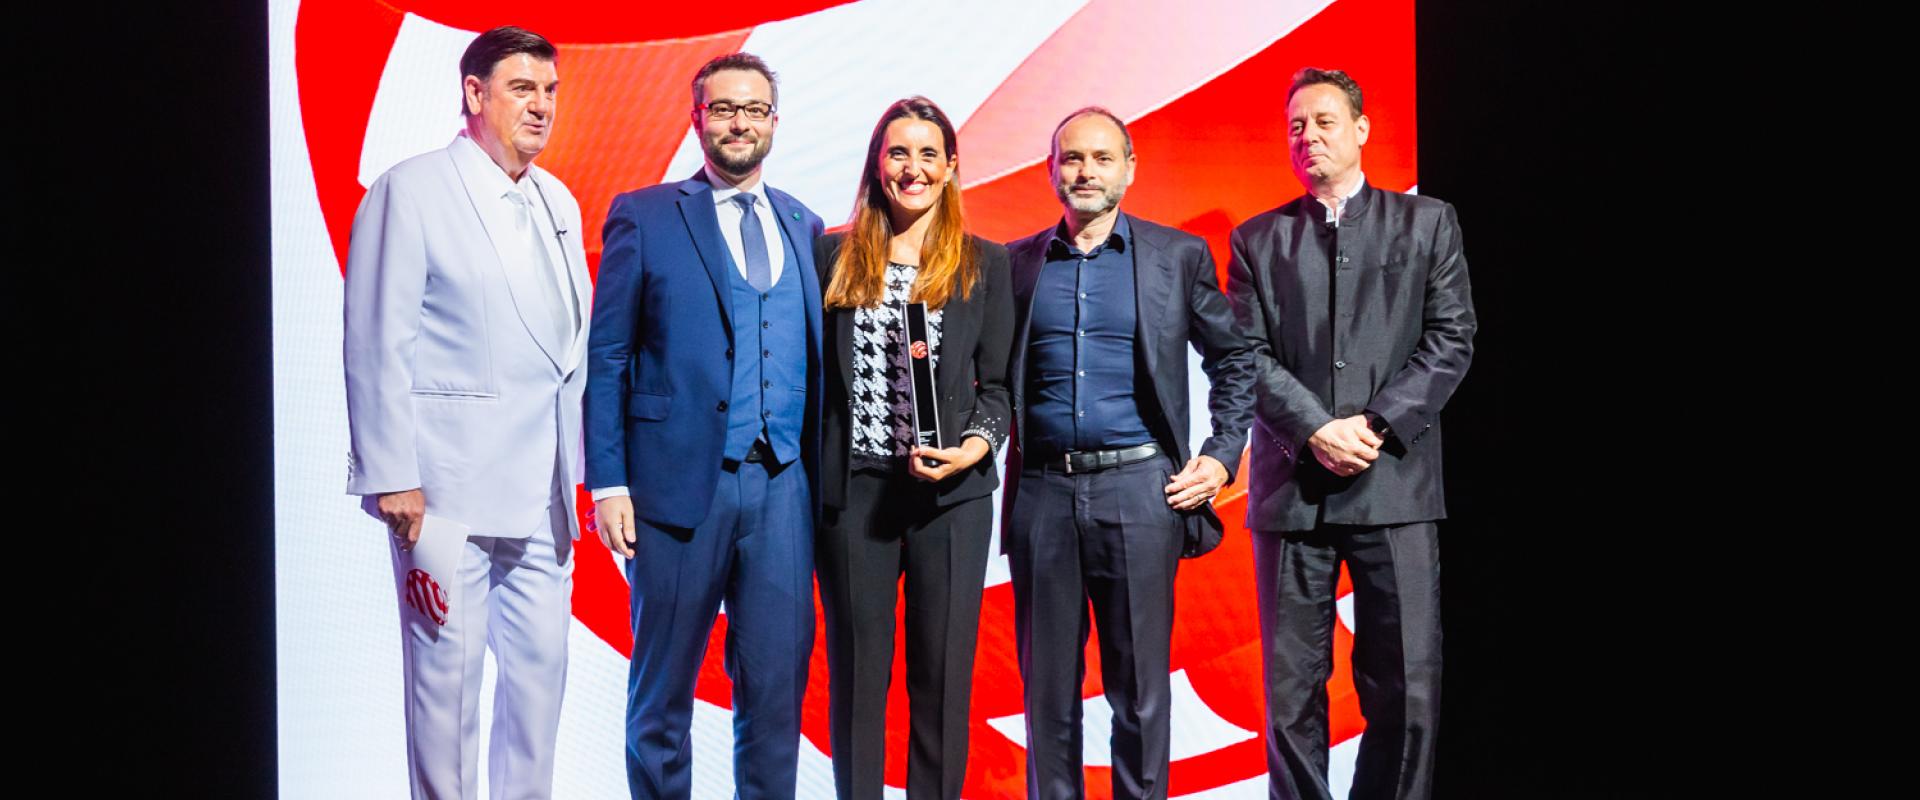 Cozzolino Studio honored with Red Dot Design Award for Primula